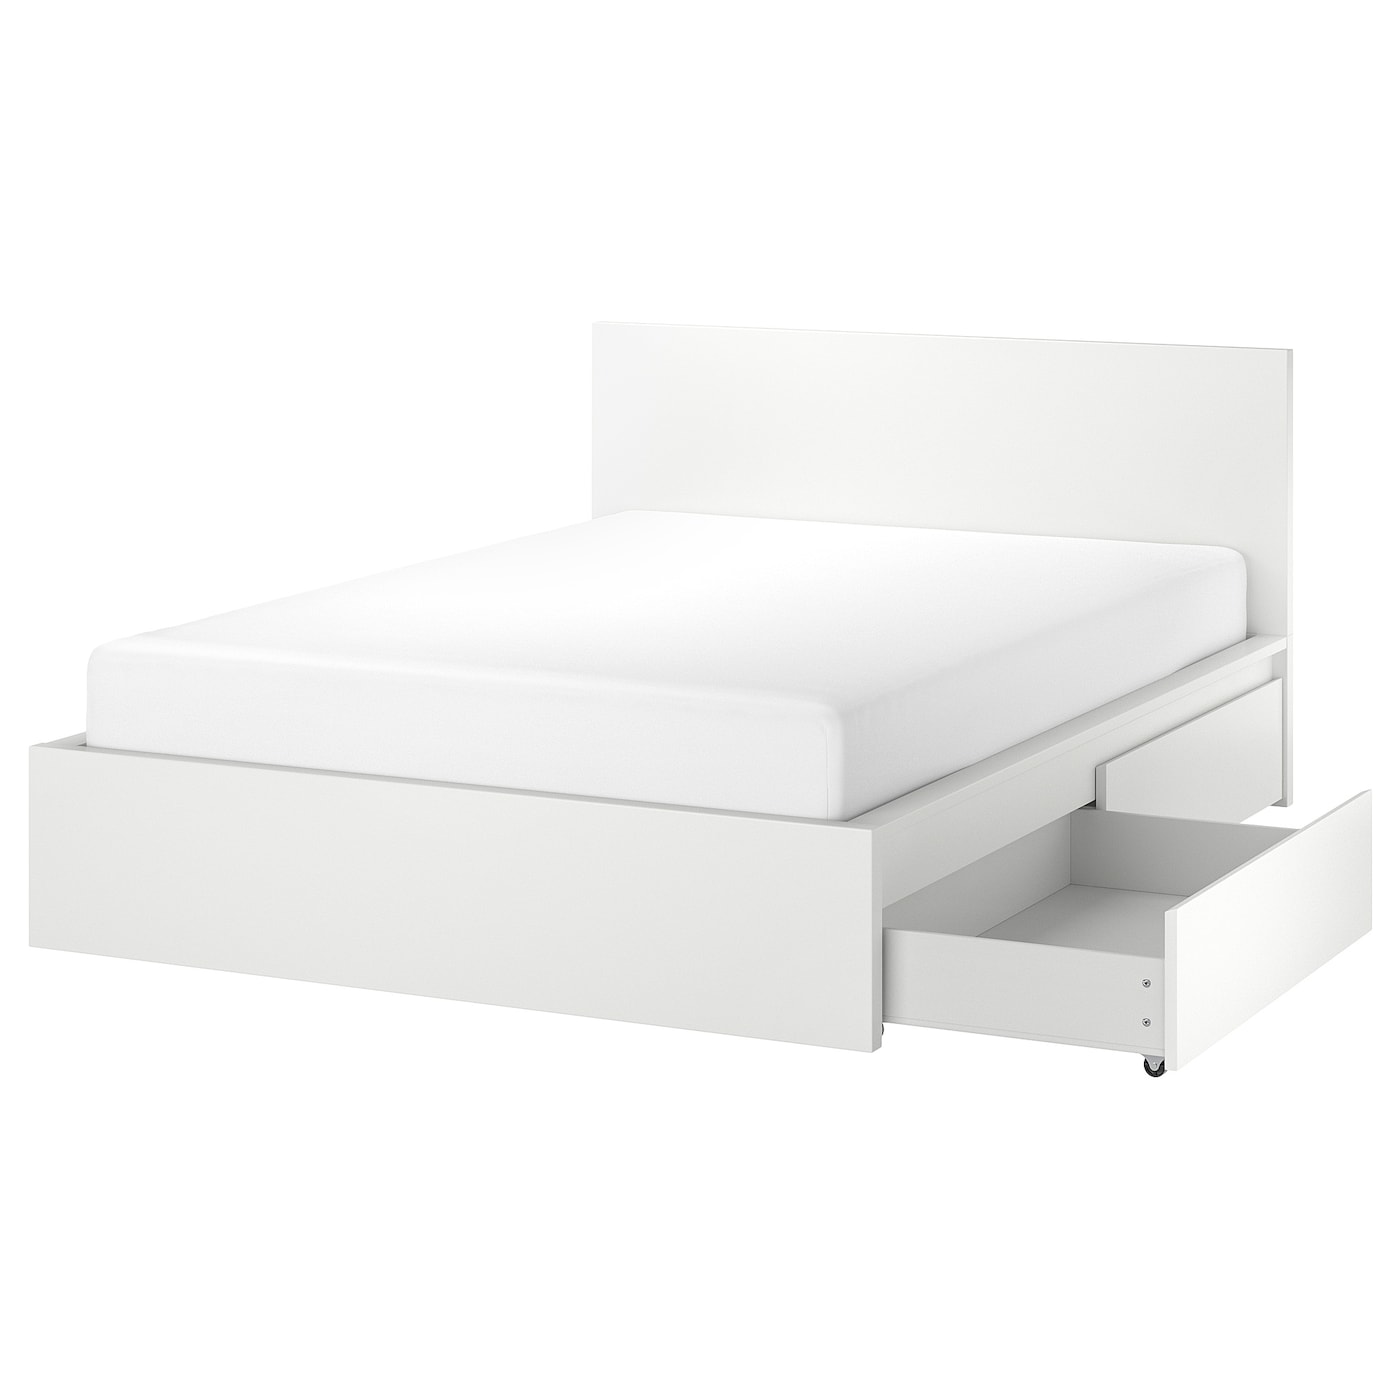 Каркас кровати с 2 ящиками для хранения - IKEA MALM/LUROY/LURÖY, 140х200 см, белый МАЛЬМ/ЛУРОЙ ИКЕА